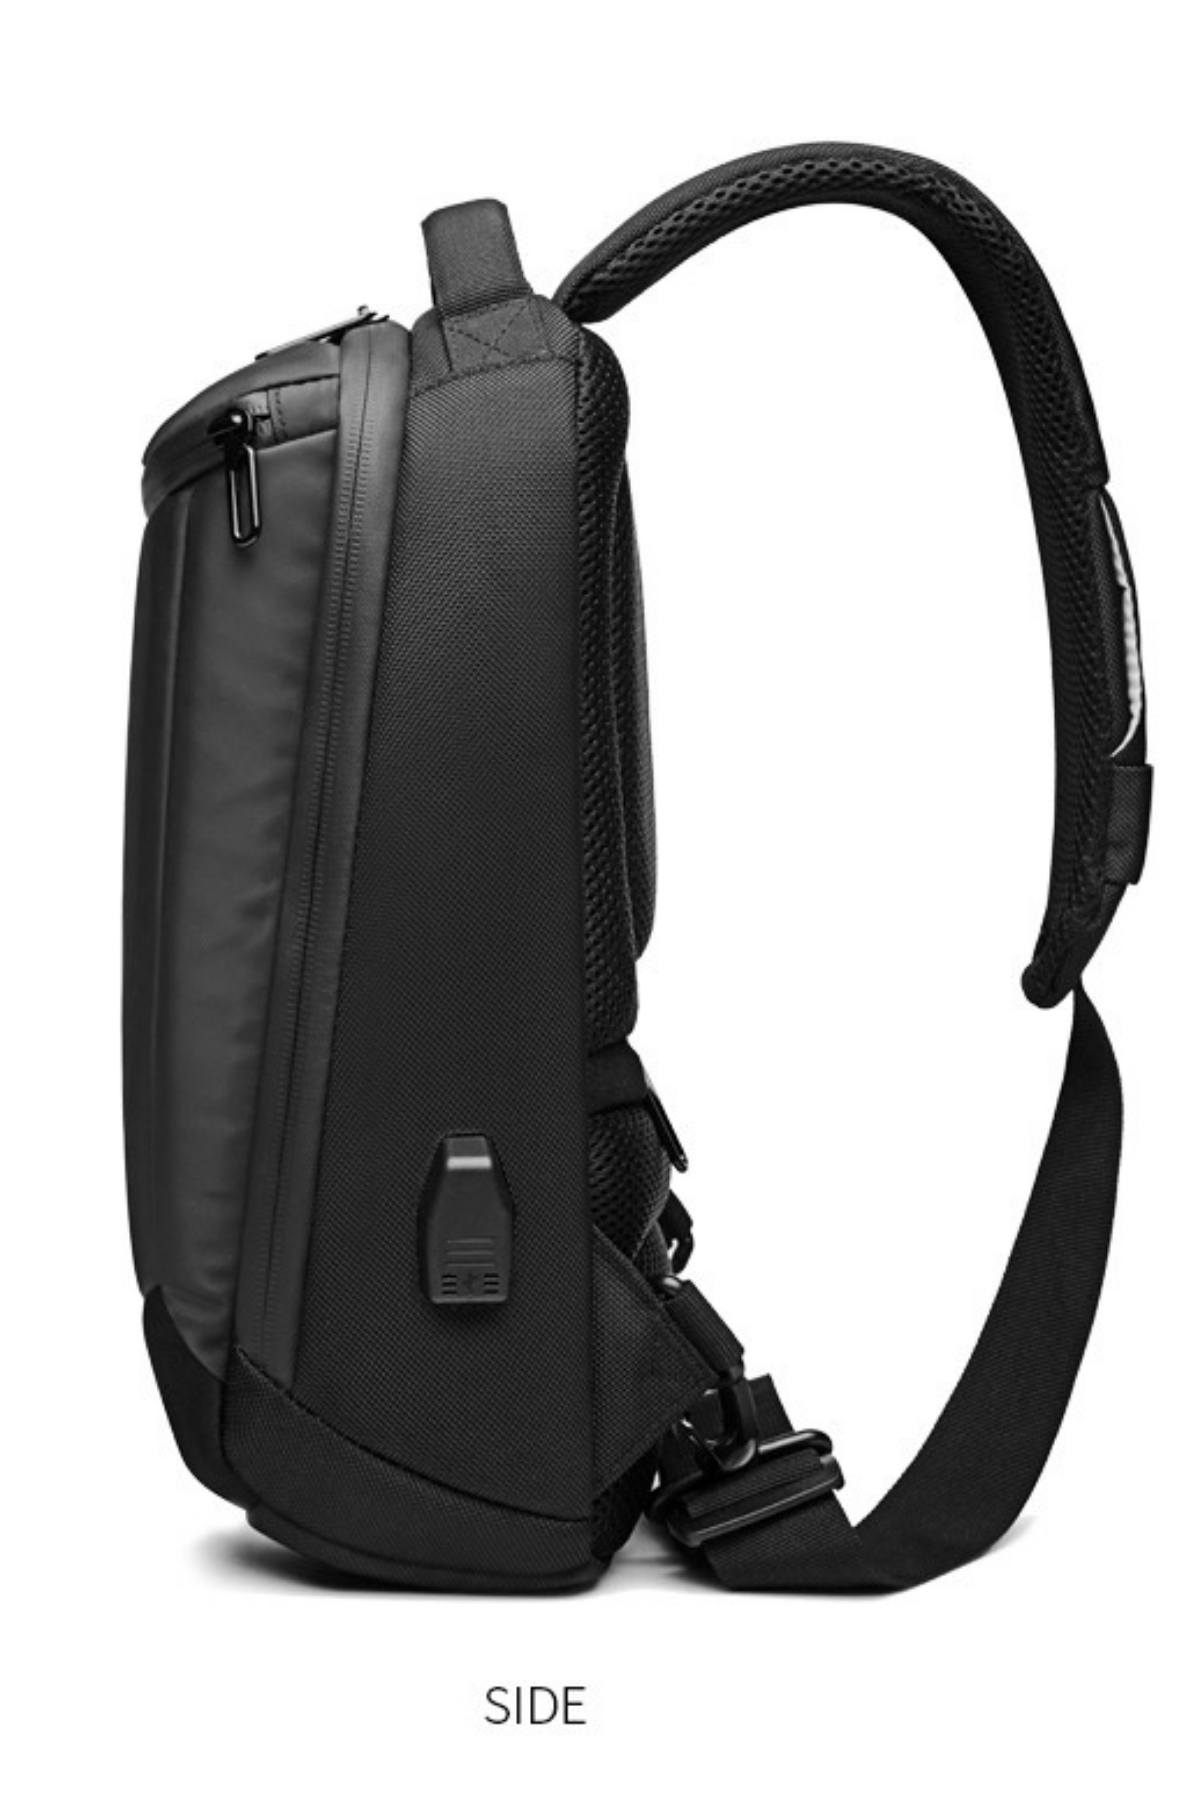 Ozuko Army-Green Waterproof Crossbody Single Shoulder Bag